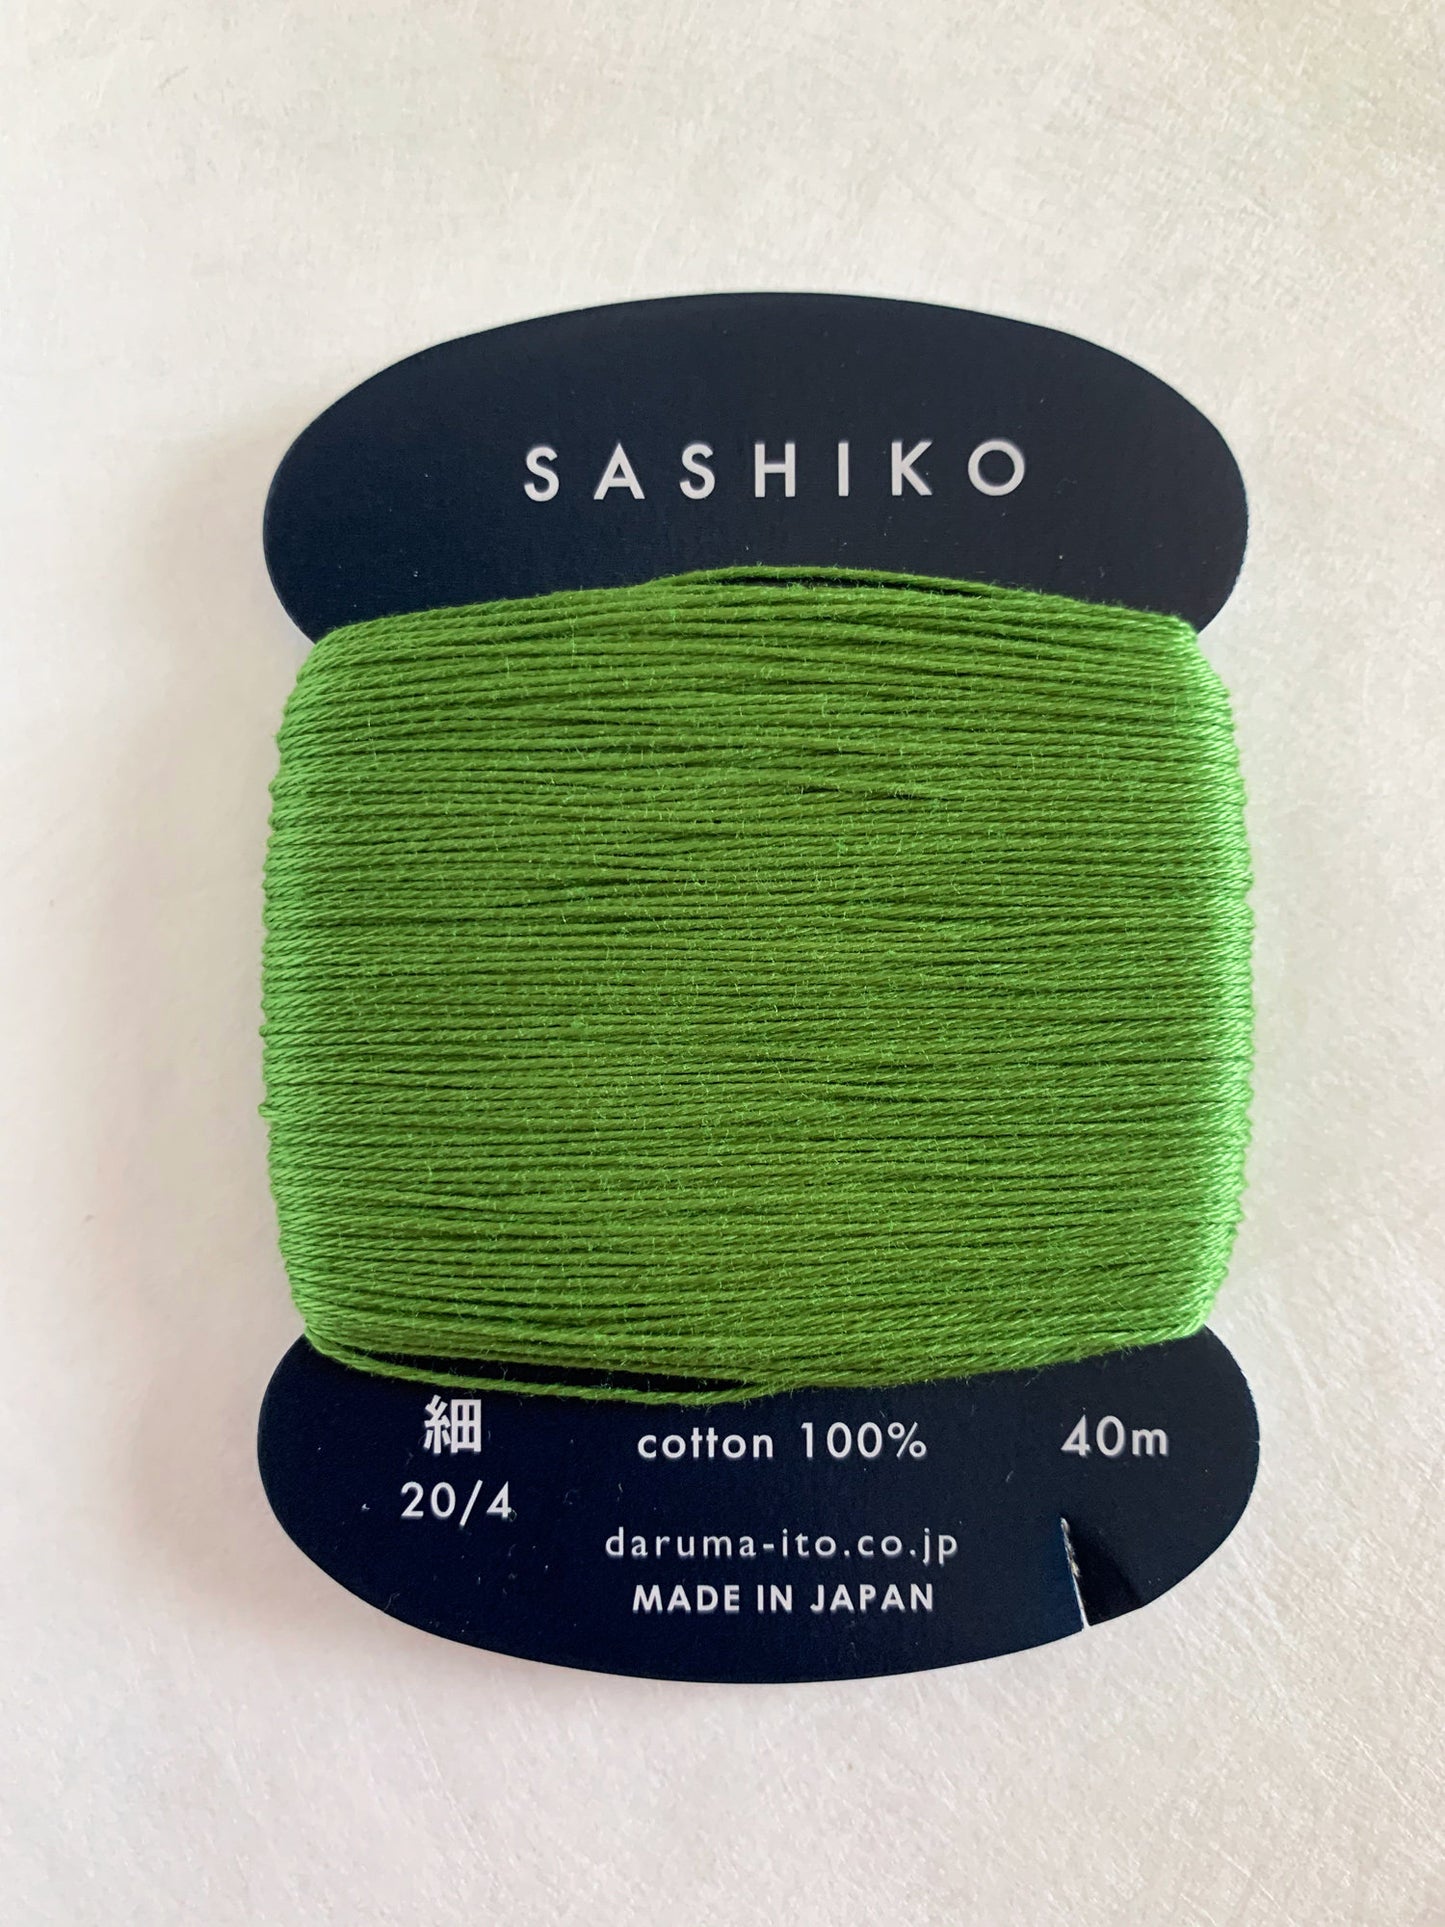 Daruma #227 SPRING GREEN Japanese Cotton SASHIKO thread 40 meter card 20/4 萌黄